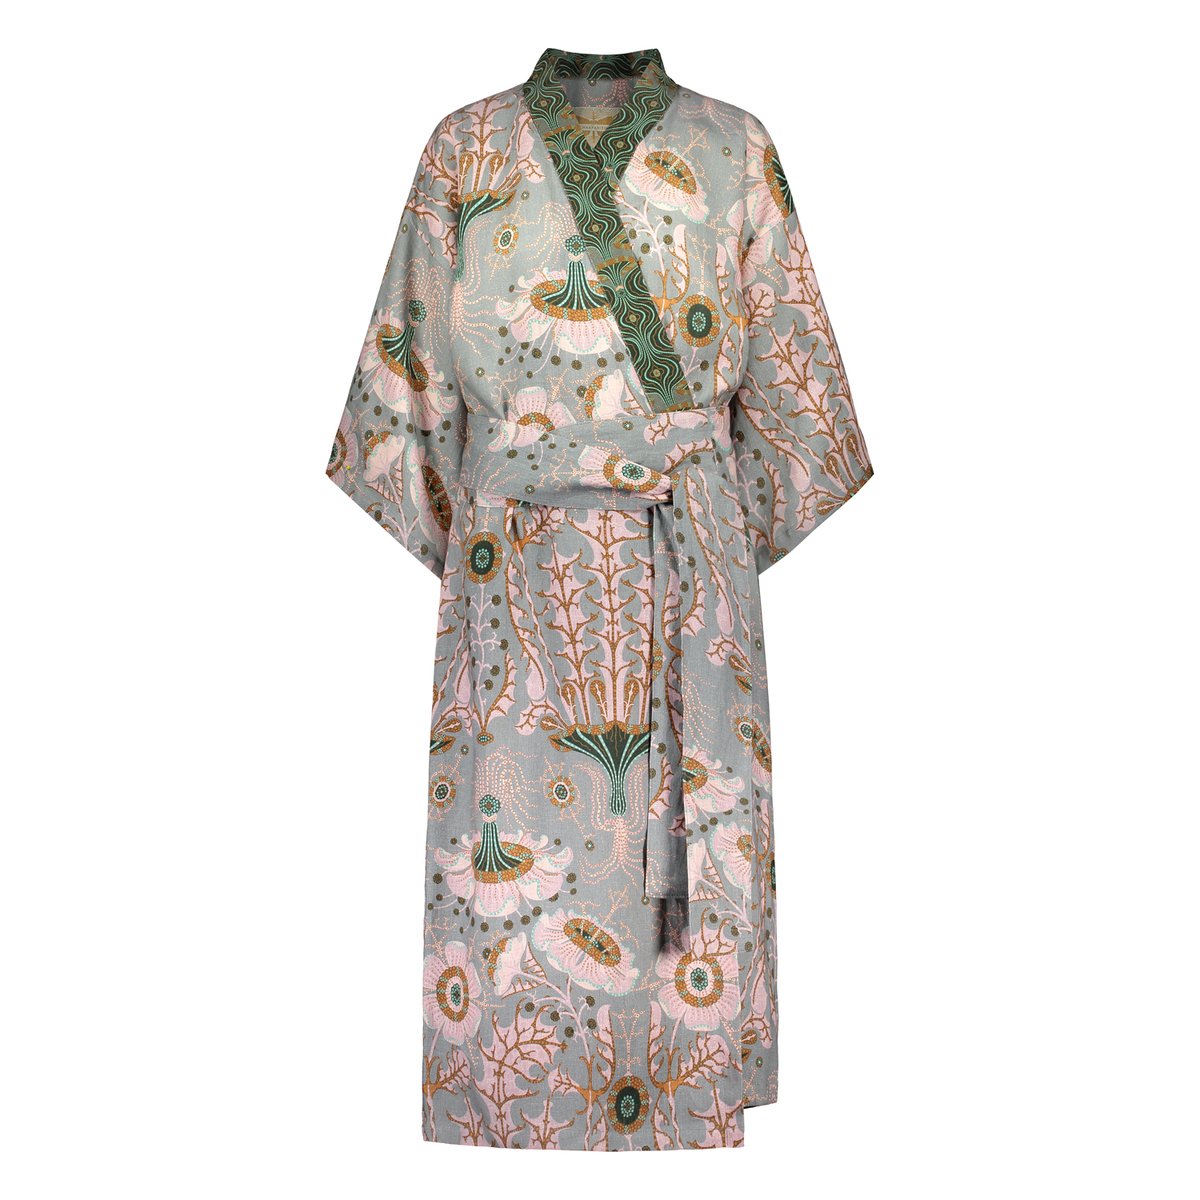 Klaus Haapaniemi & Co. Equinoxe Yukata dressing gown, linen | Pre-used ...